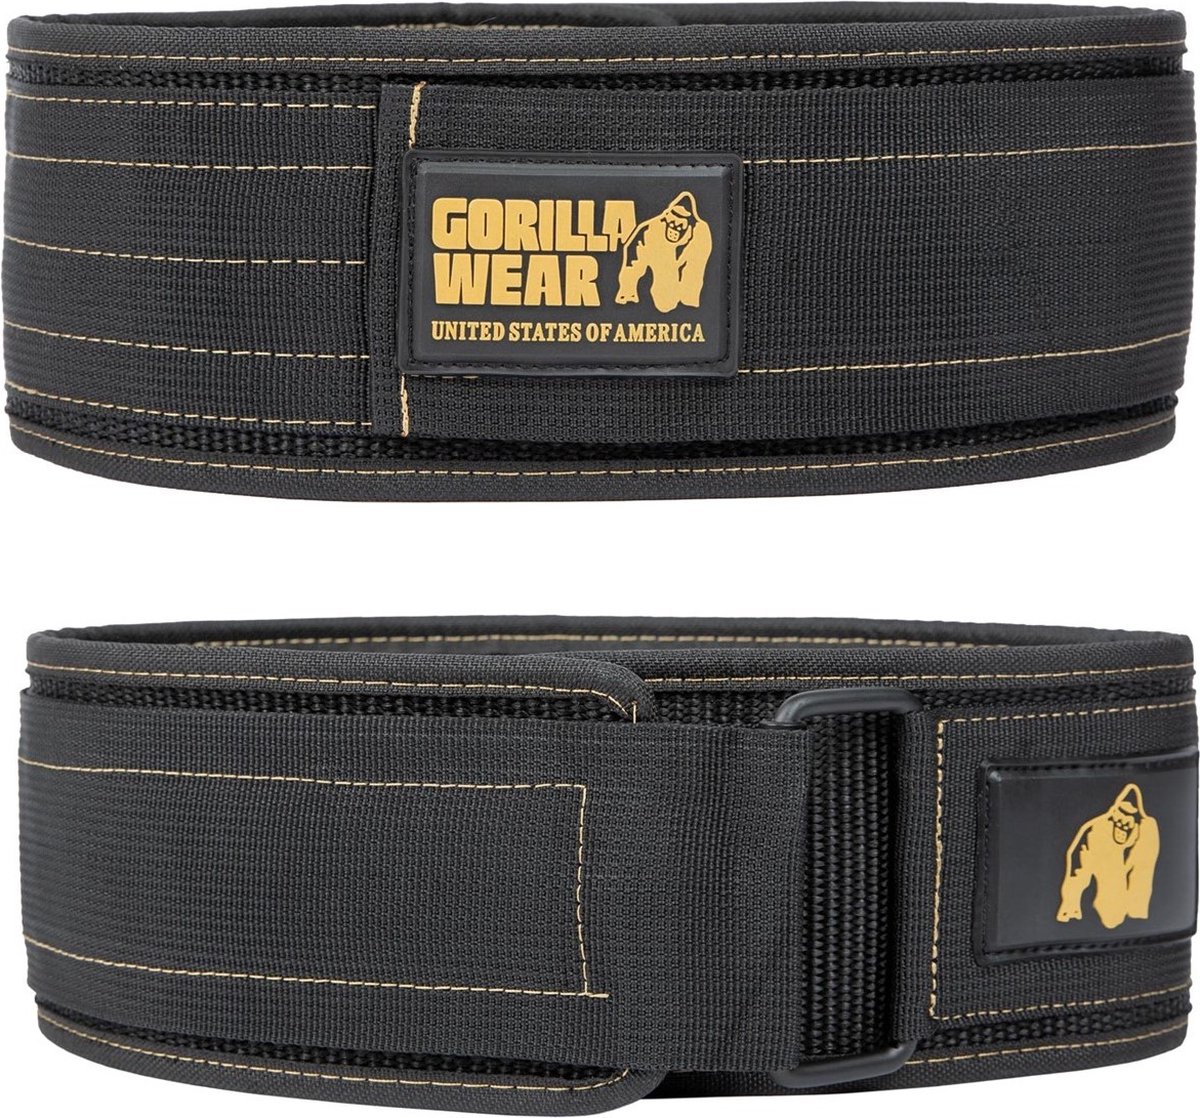 Gorilla Wear 4 Inch Nylon Lifting Belt - Zwart / Goud - M/L - Gorilla Wear